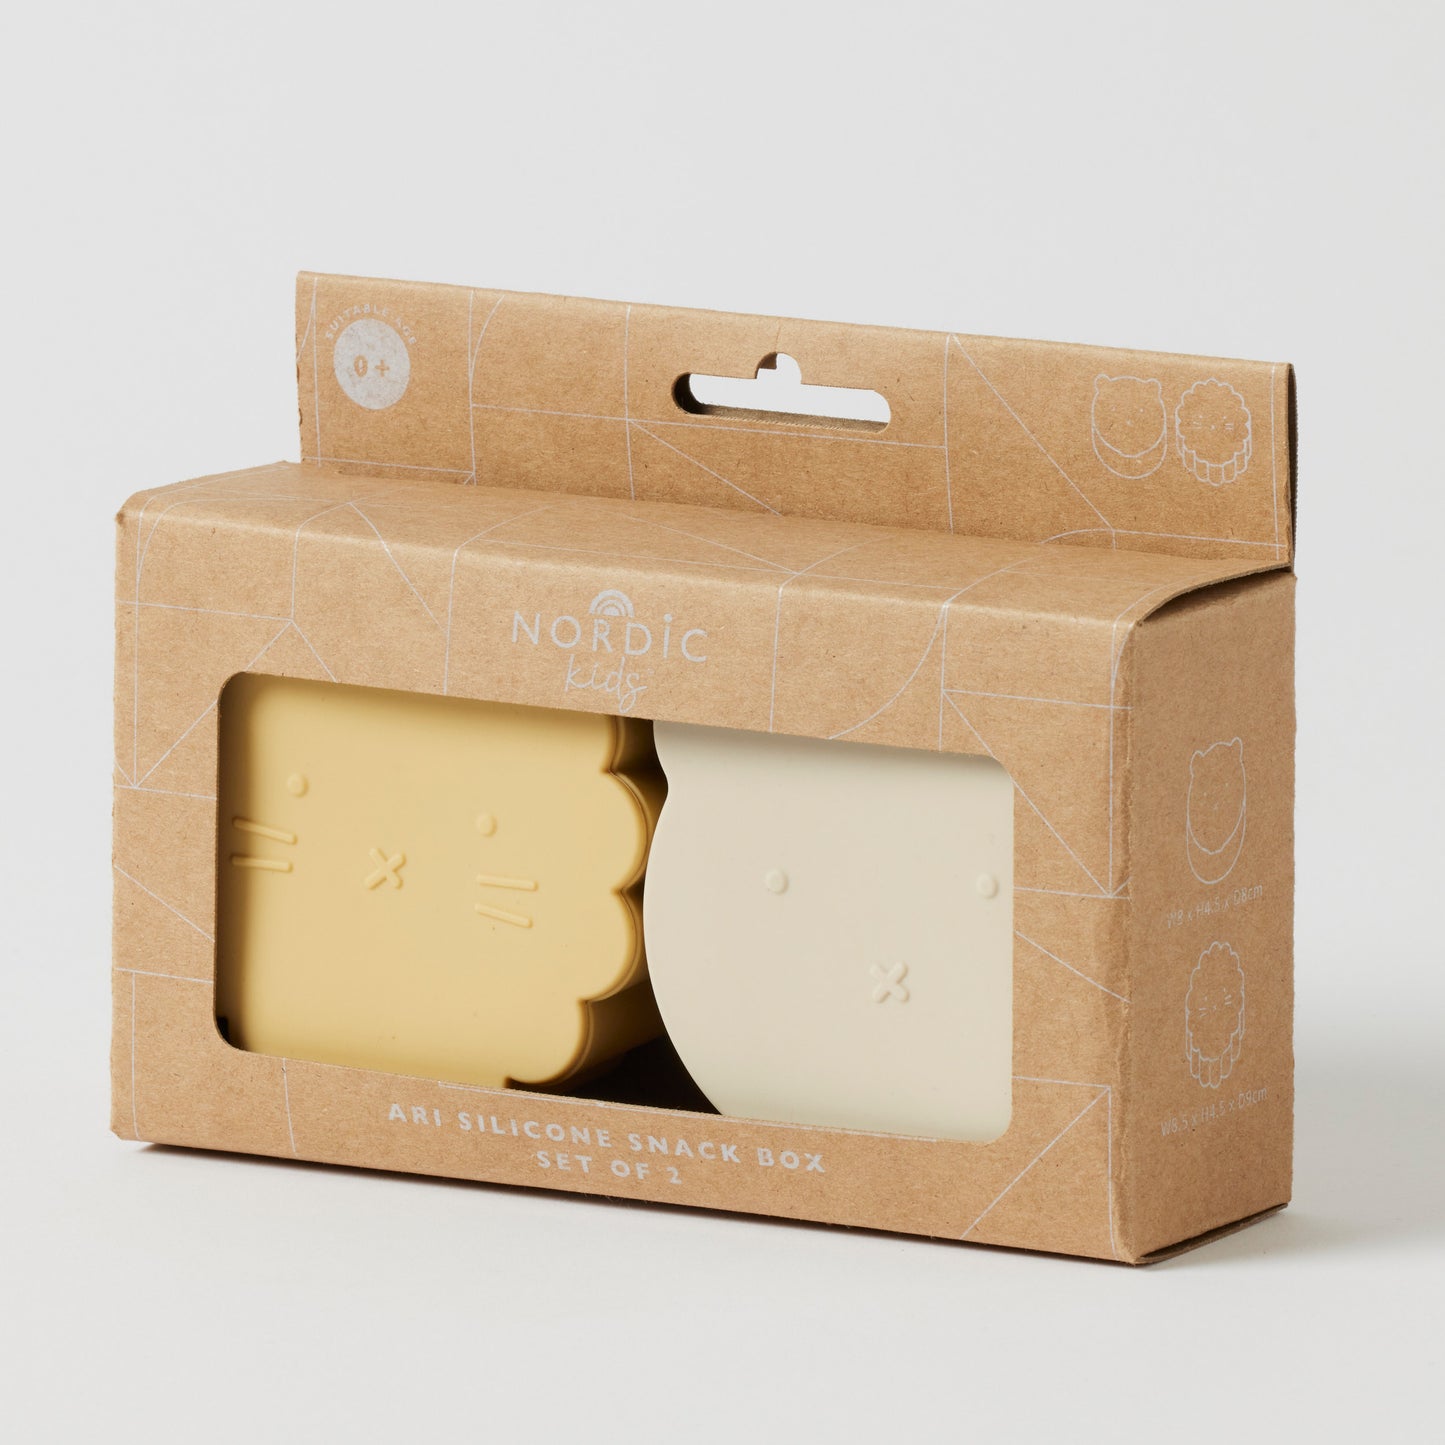 Ari Silicone Snack Box | Set of 2